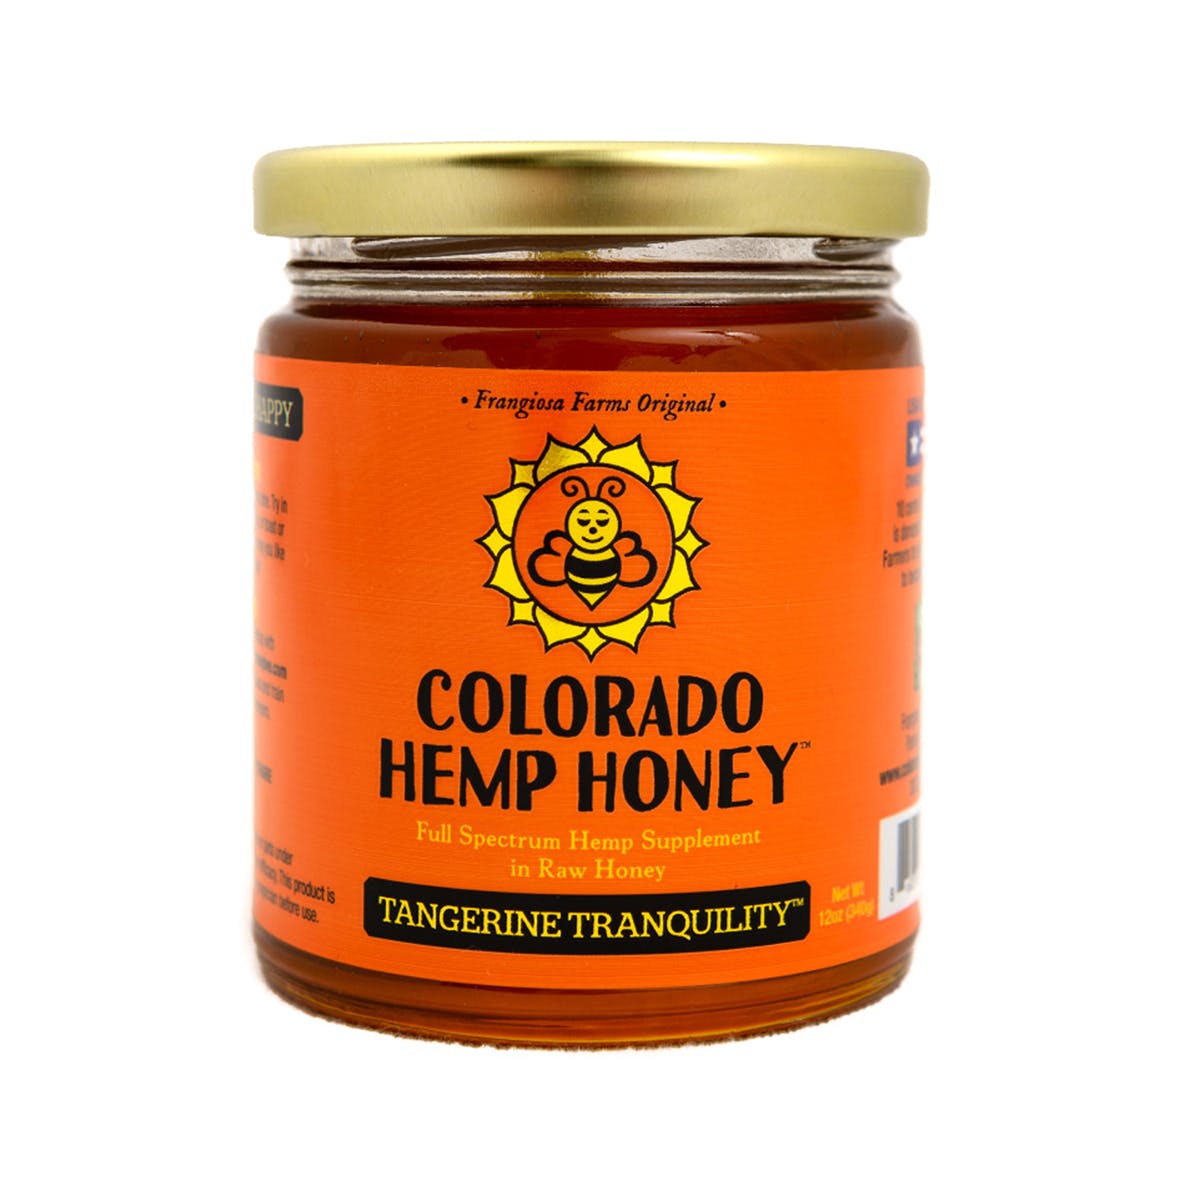 marijuana-dispensaries-14613-south-memorial-drive-bixby-colorado-hemp-honey-tangerine-tranquility